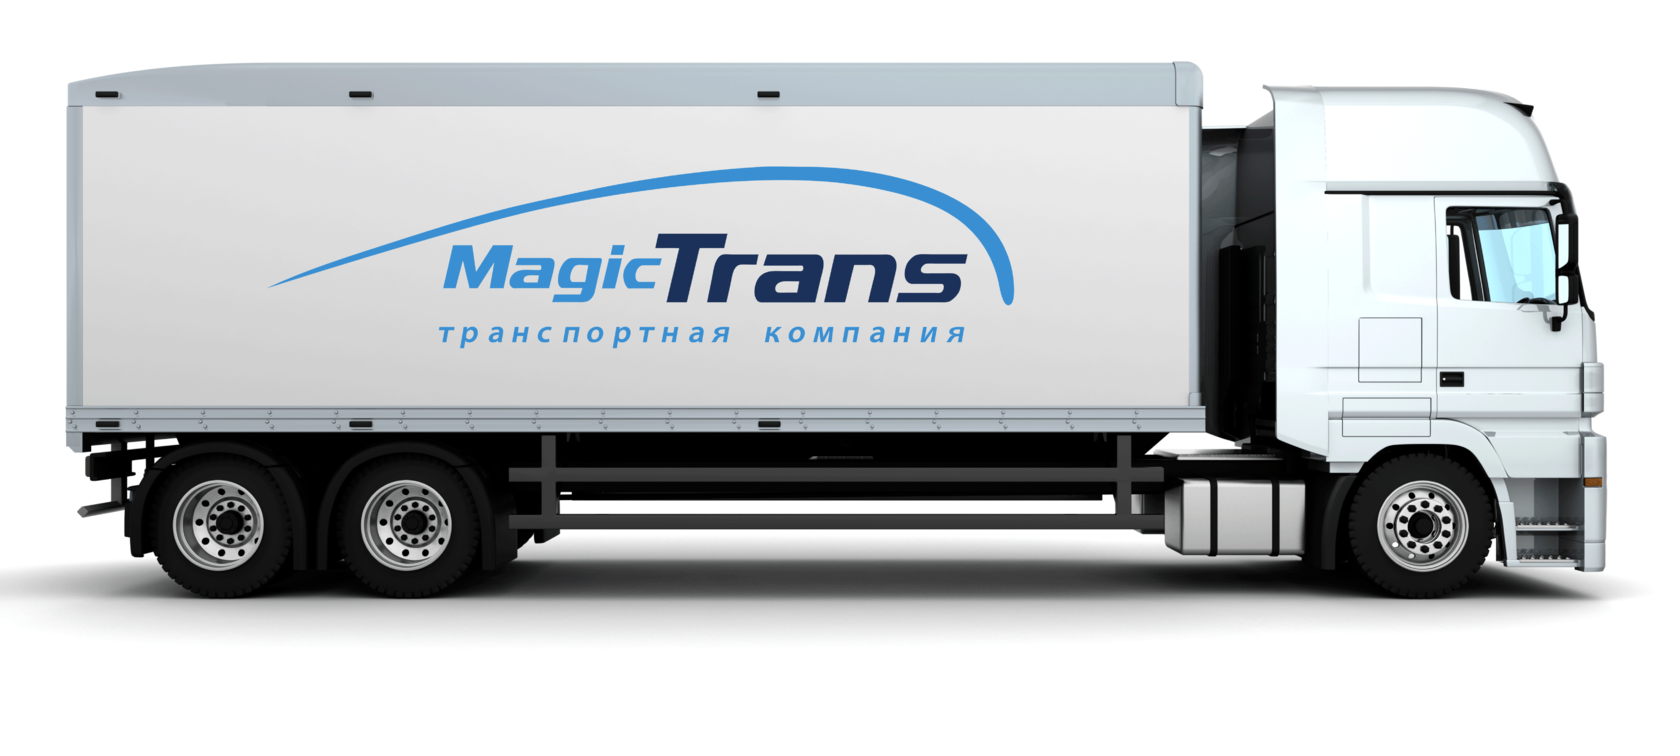 Компания magic trans. Мейджик транс транспортная компания. Мейджик транс транспортная компания лого. ТК Мейджик транс логотип. Фуры компании Magic Trans.